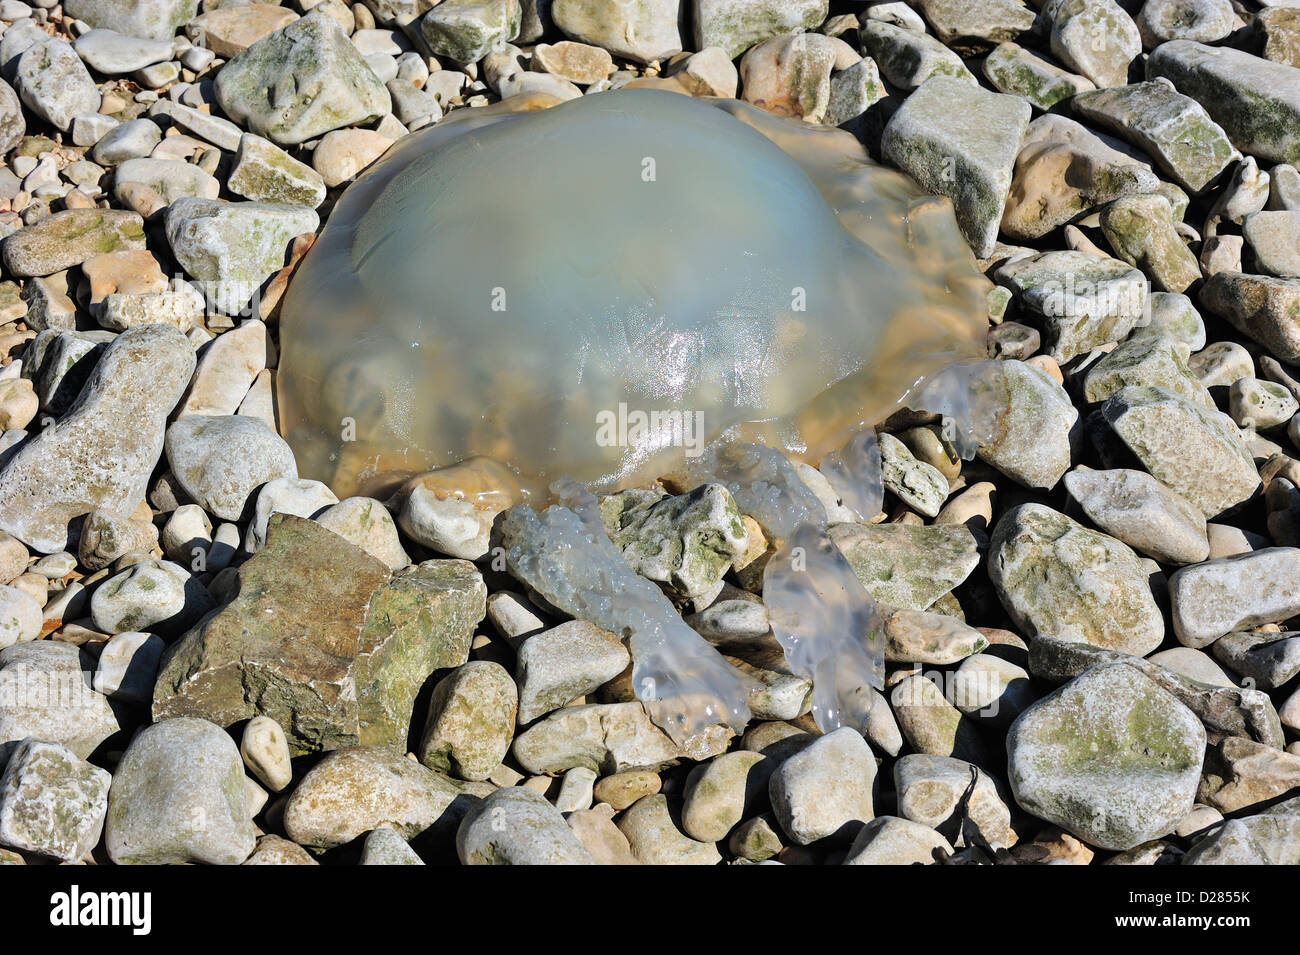 Barrel jellyfish / dustbin-lid jellyfish (Rhizostoma octopus / Rhizostoma pulmo) washed ashore on pebble beach Stock Photo